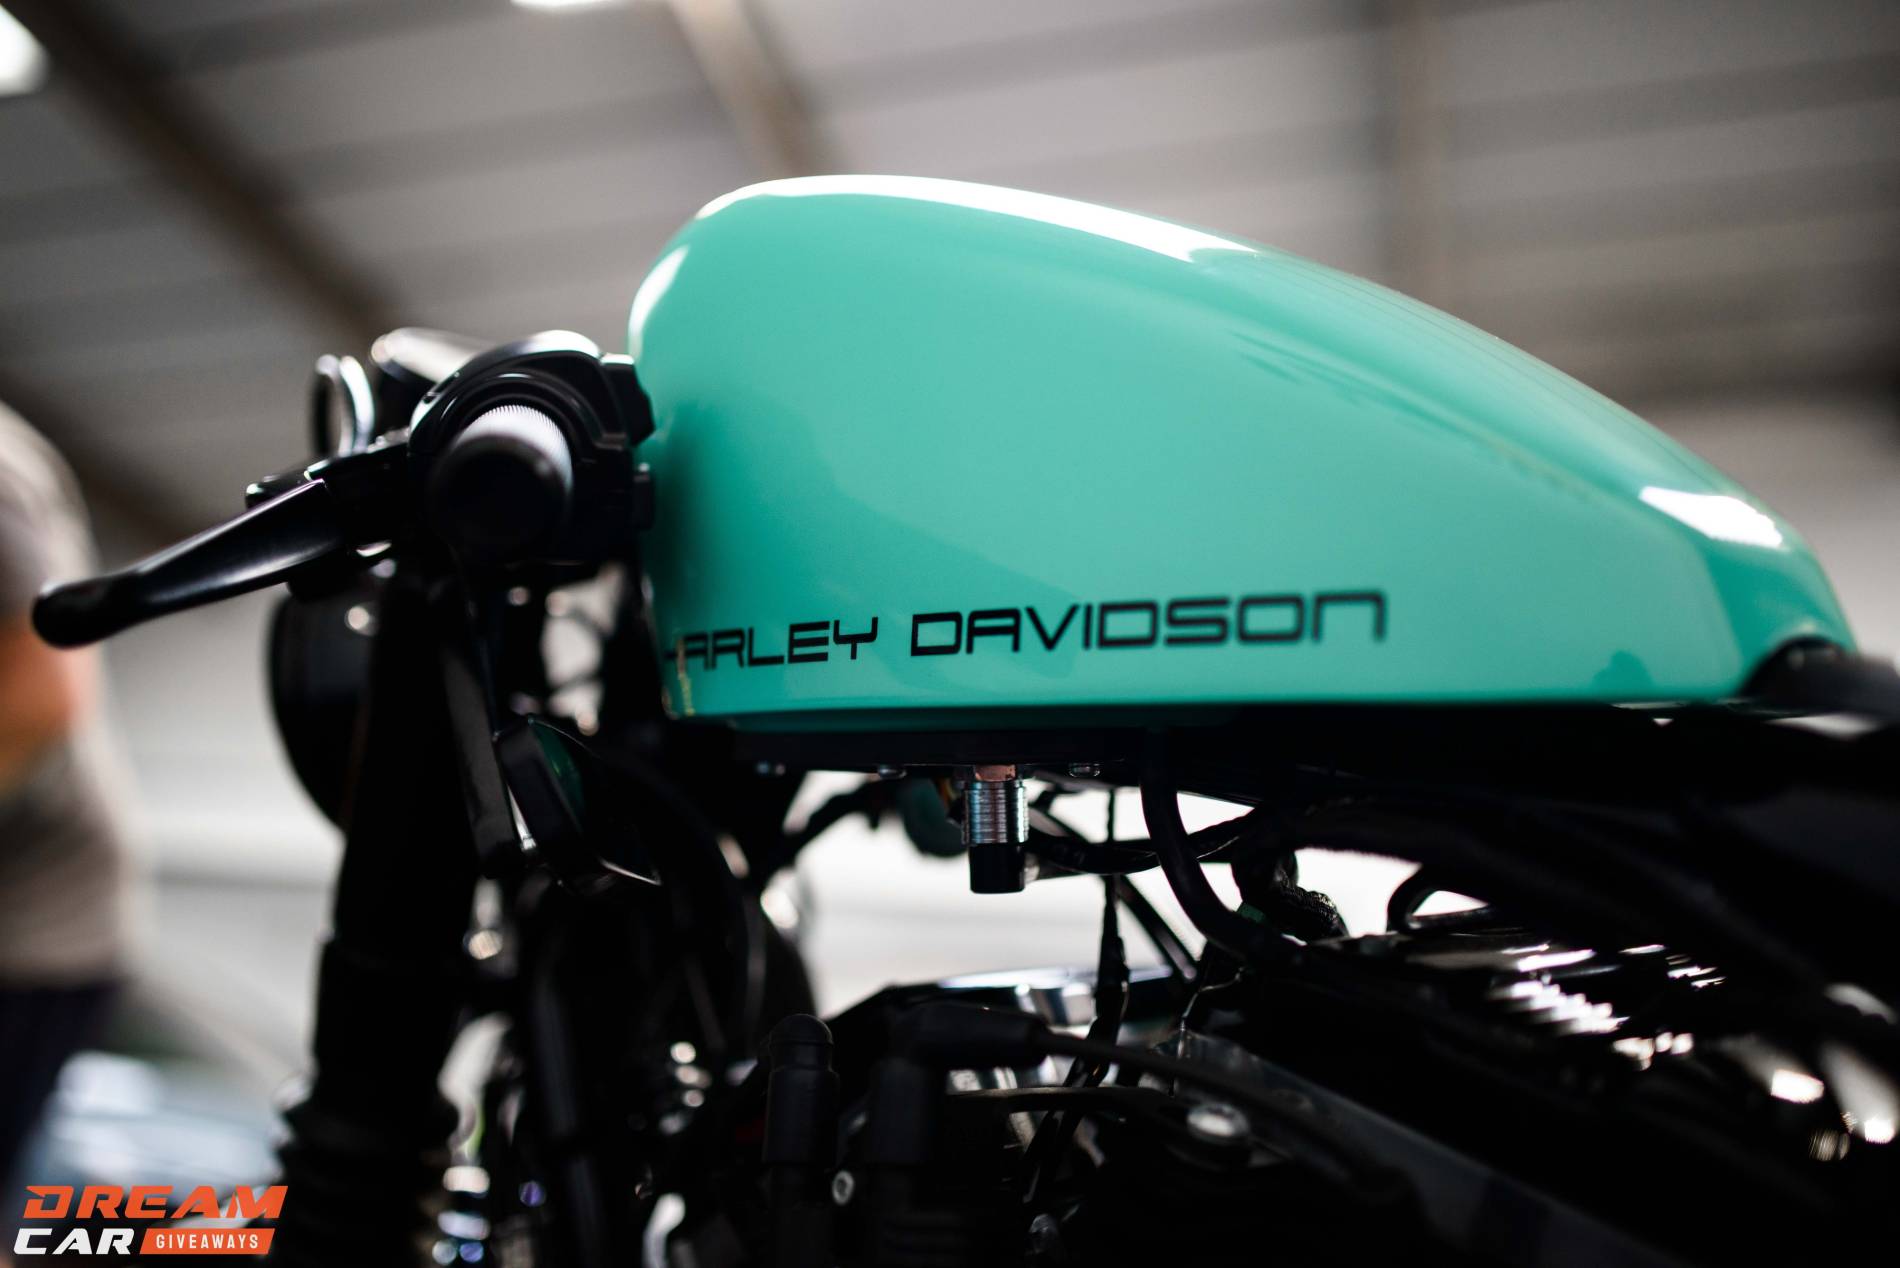 2018 Harley-Davidson 48 Custom Bobber OR £8,000 Tax Free Cash